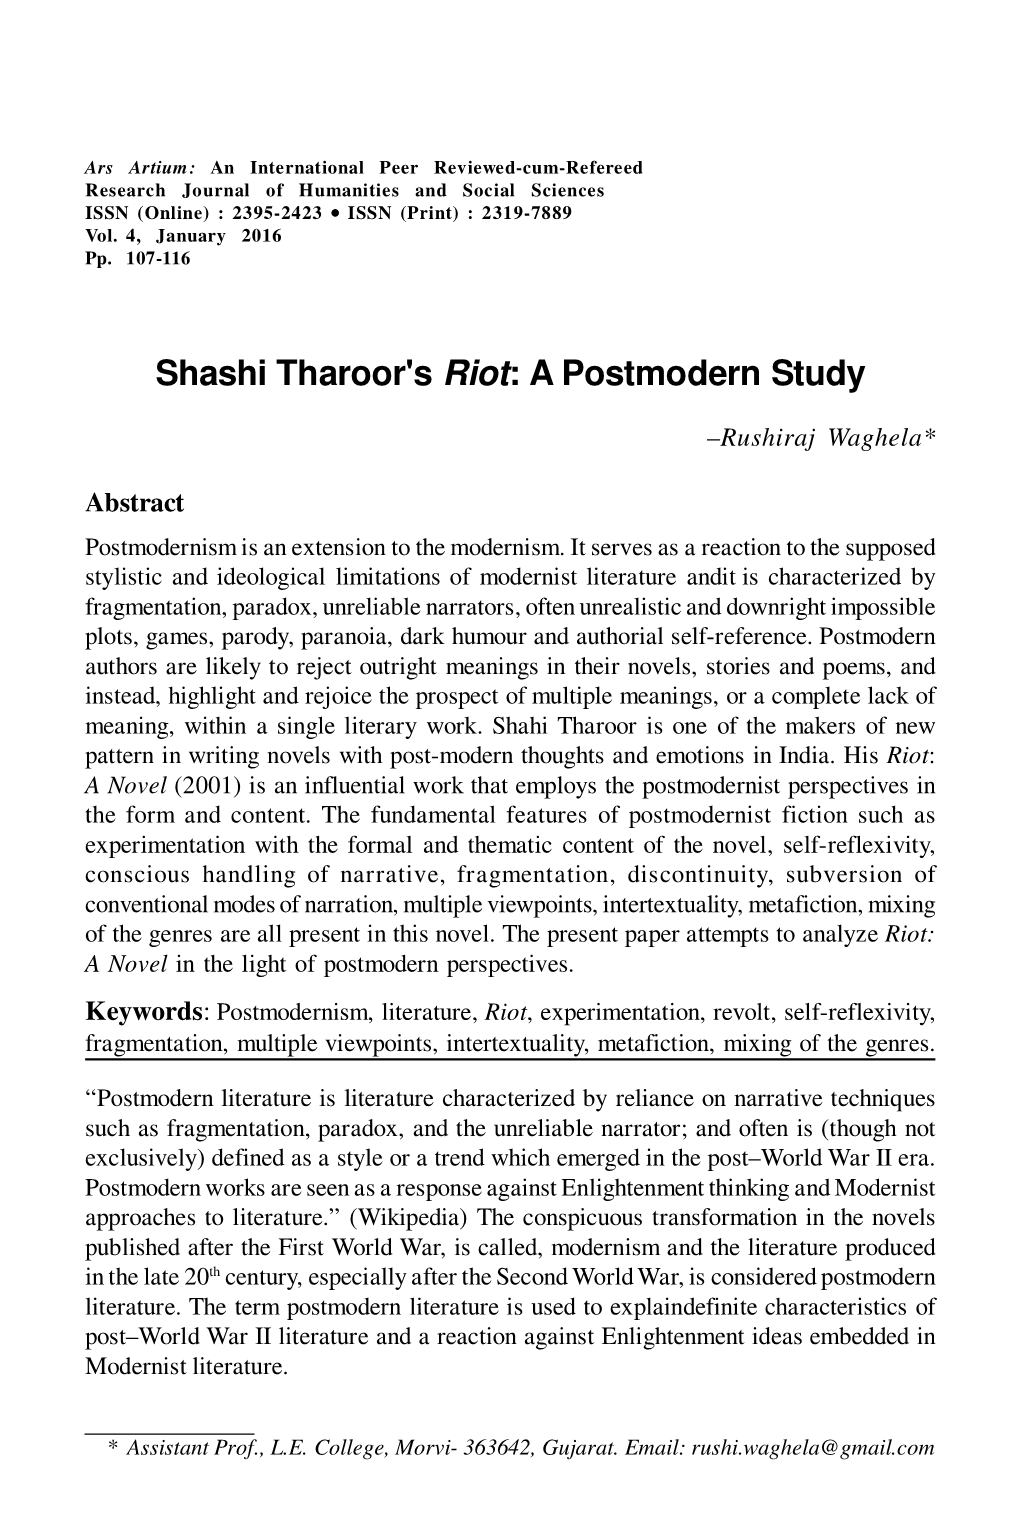 Shashi Tharoor's Riot: a Postmodern Study